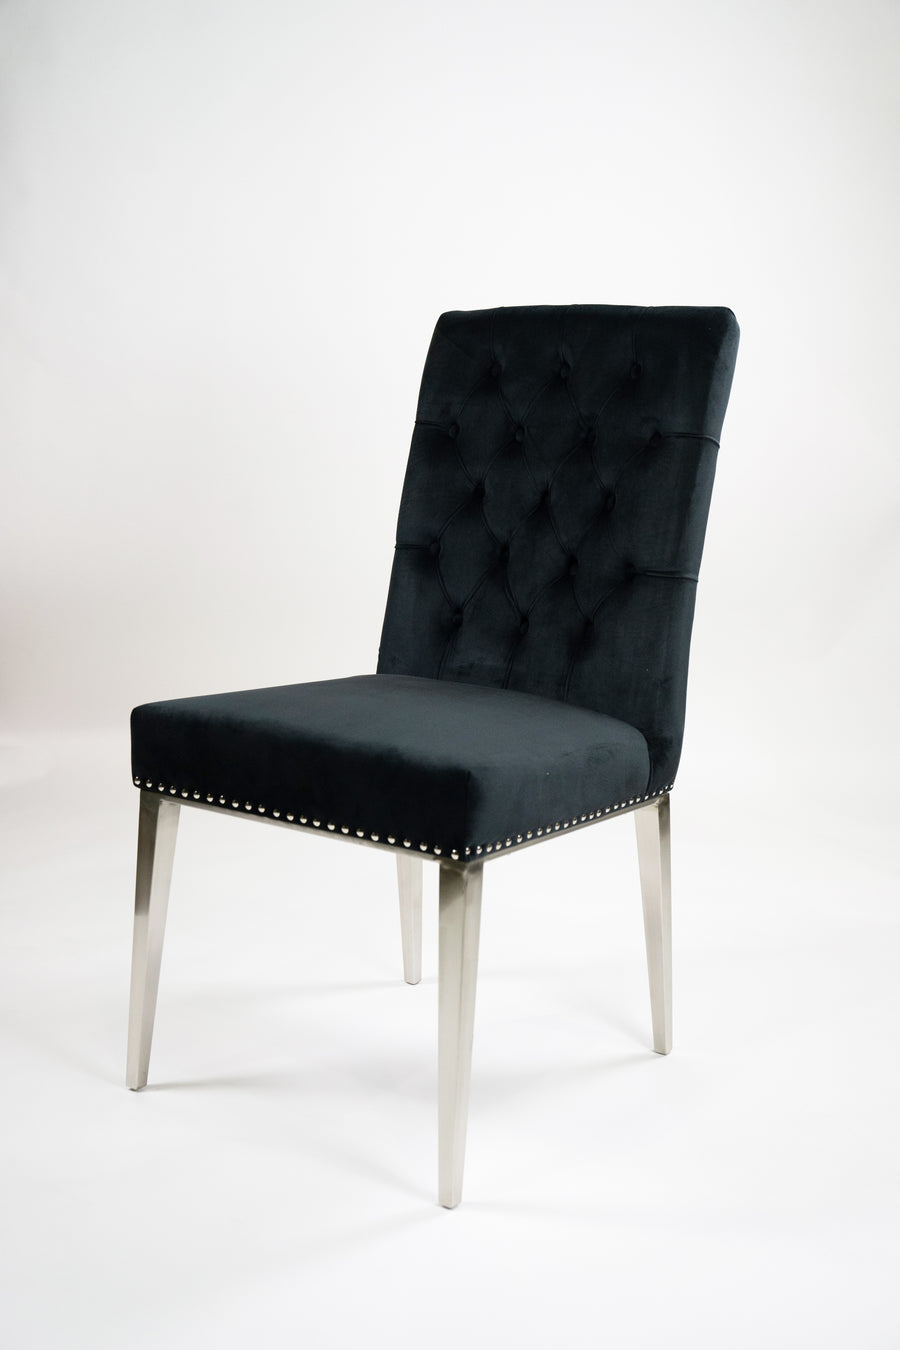 Black Velvet Button-Tufted Dining Chair With  Metal Legs - Set Of 2 HI-LINE GIFT LTD.